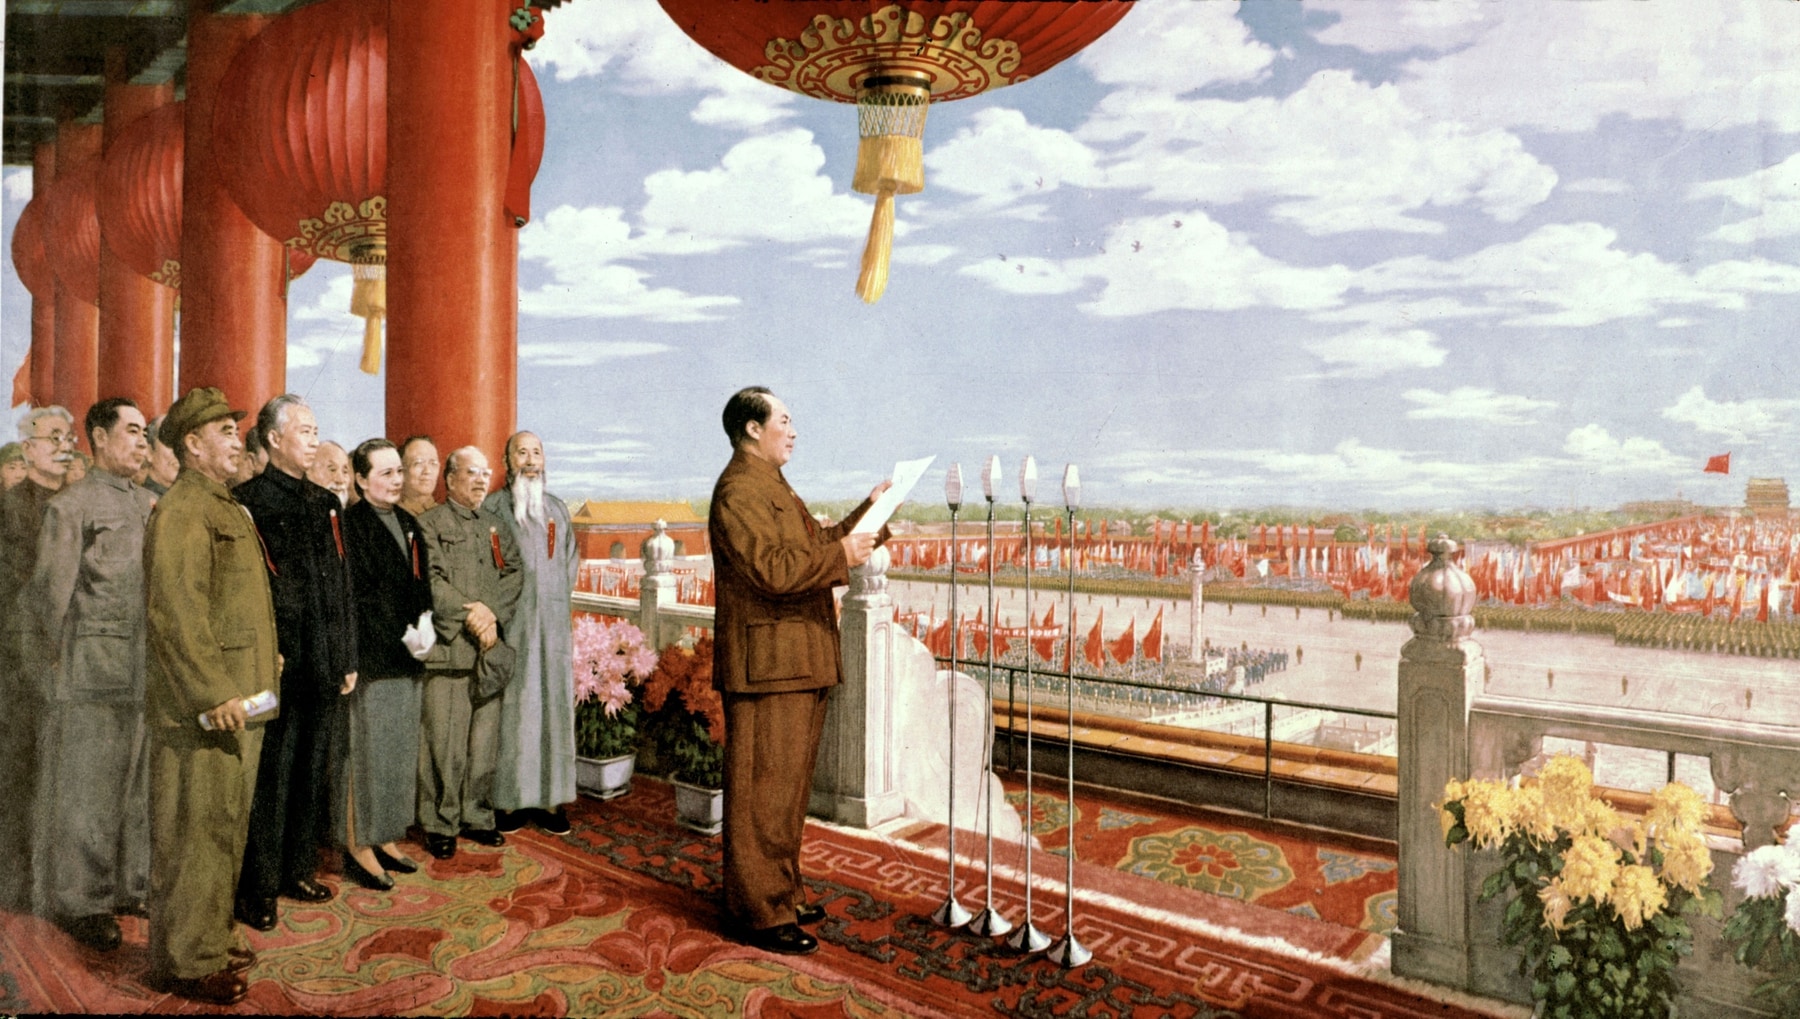 A (very) brief history of China